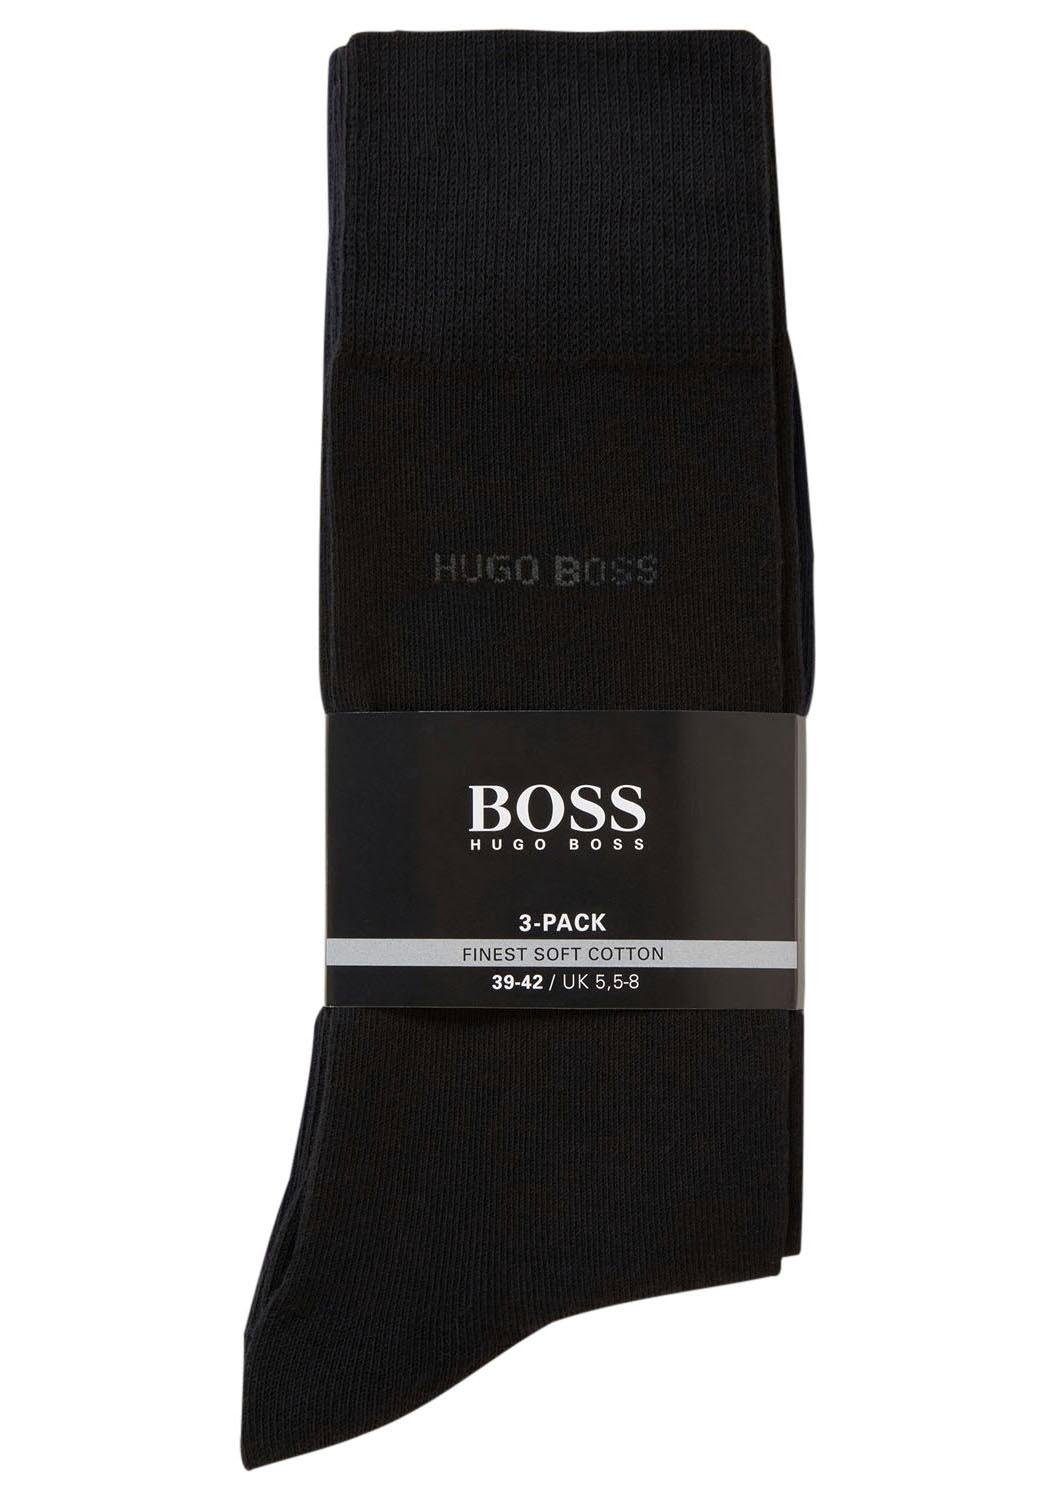 BOSS RS anthrazit, 3P (3-Paar) Uni schwarz, Socken marine